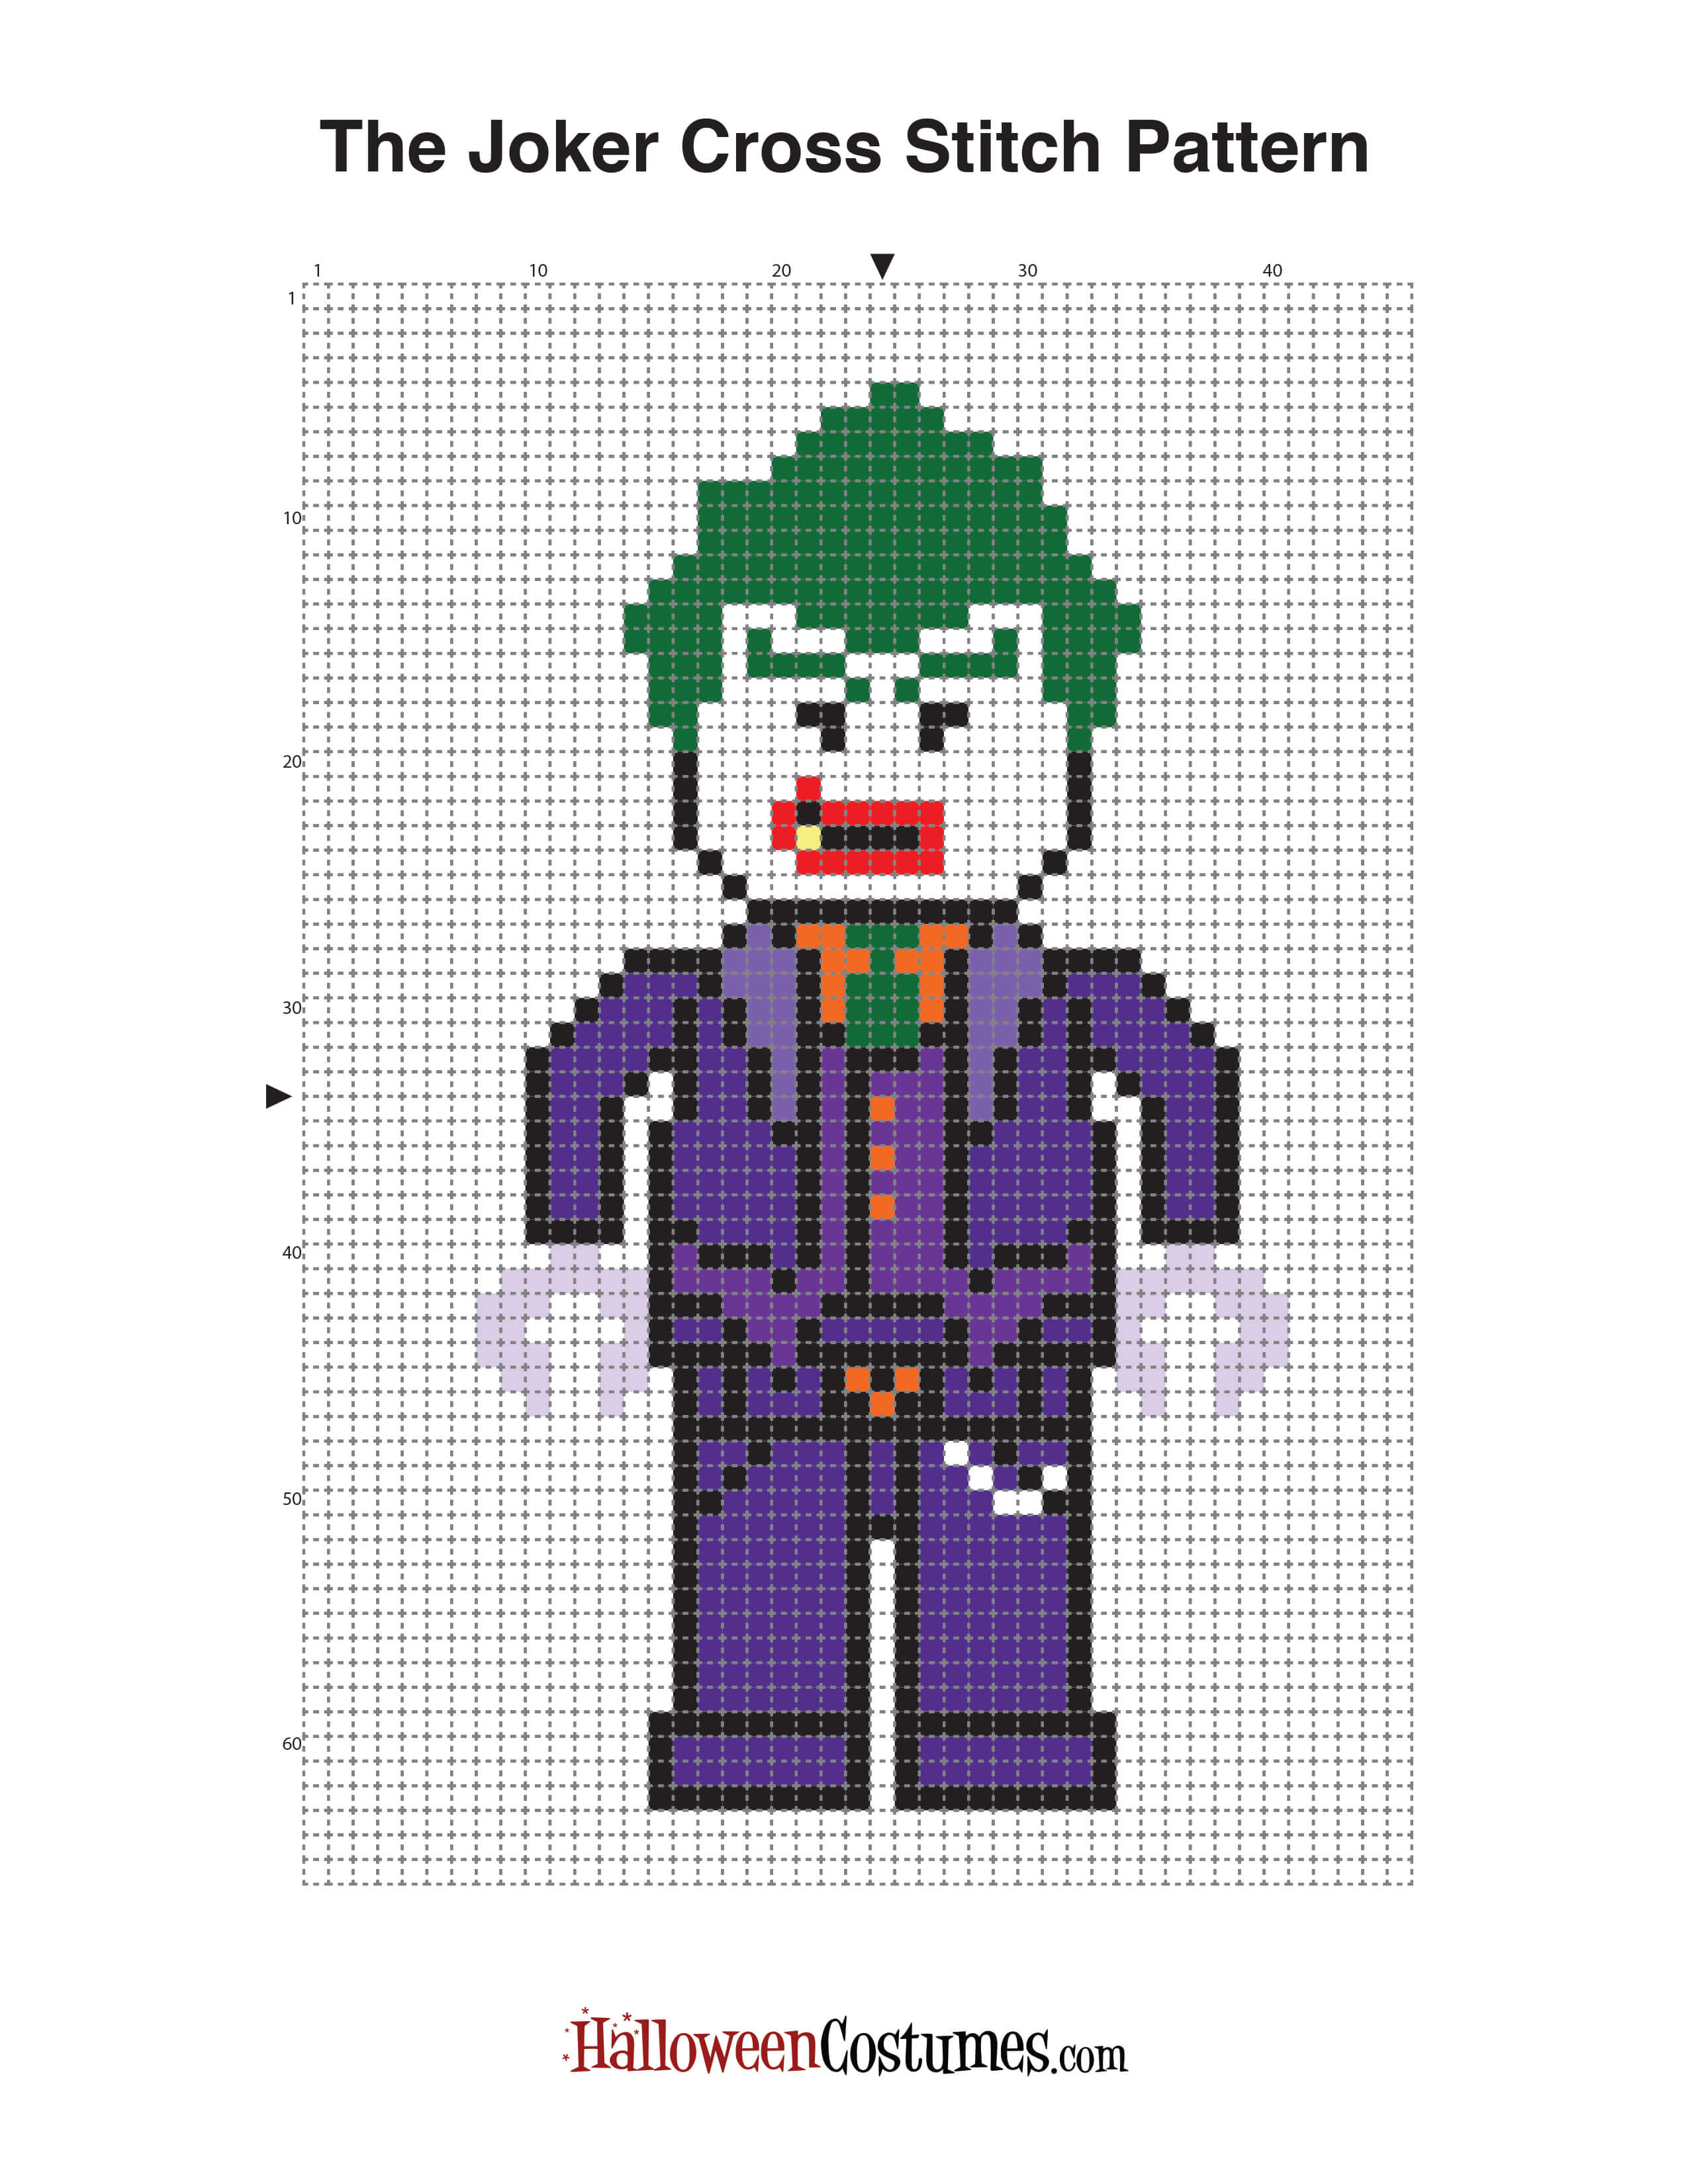 Joker Cross Stitch Pattern